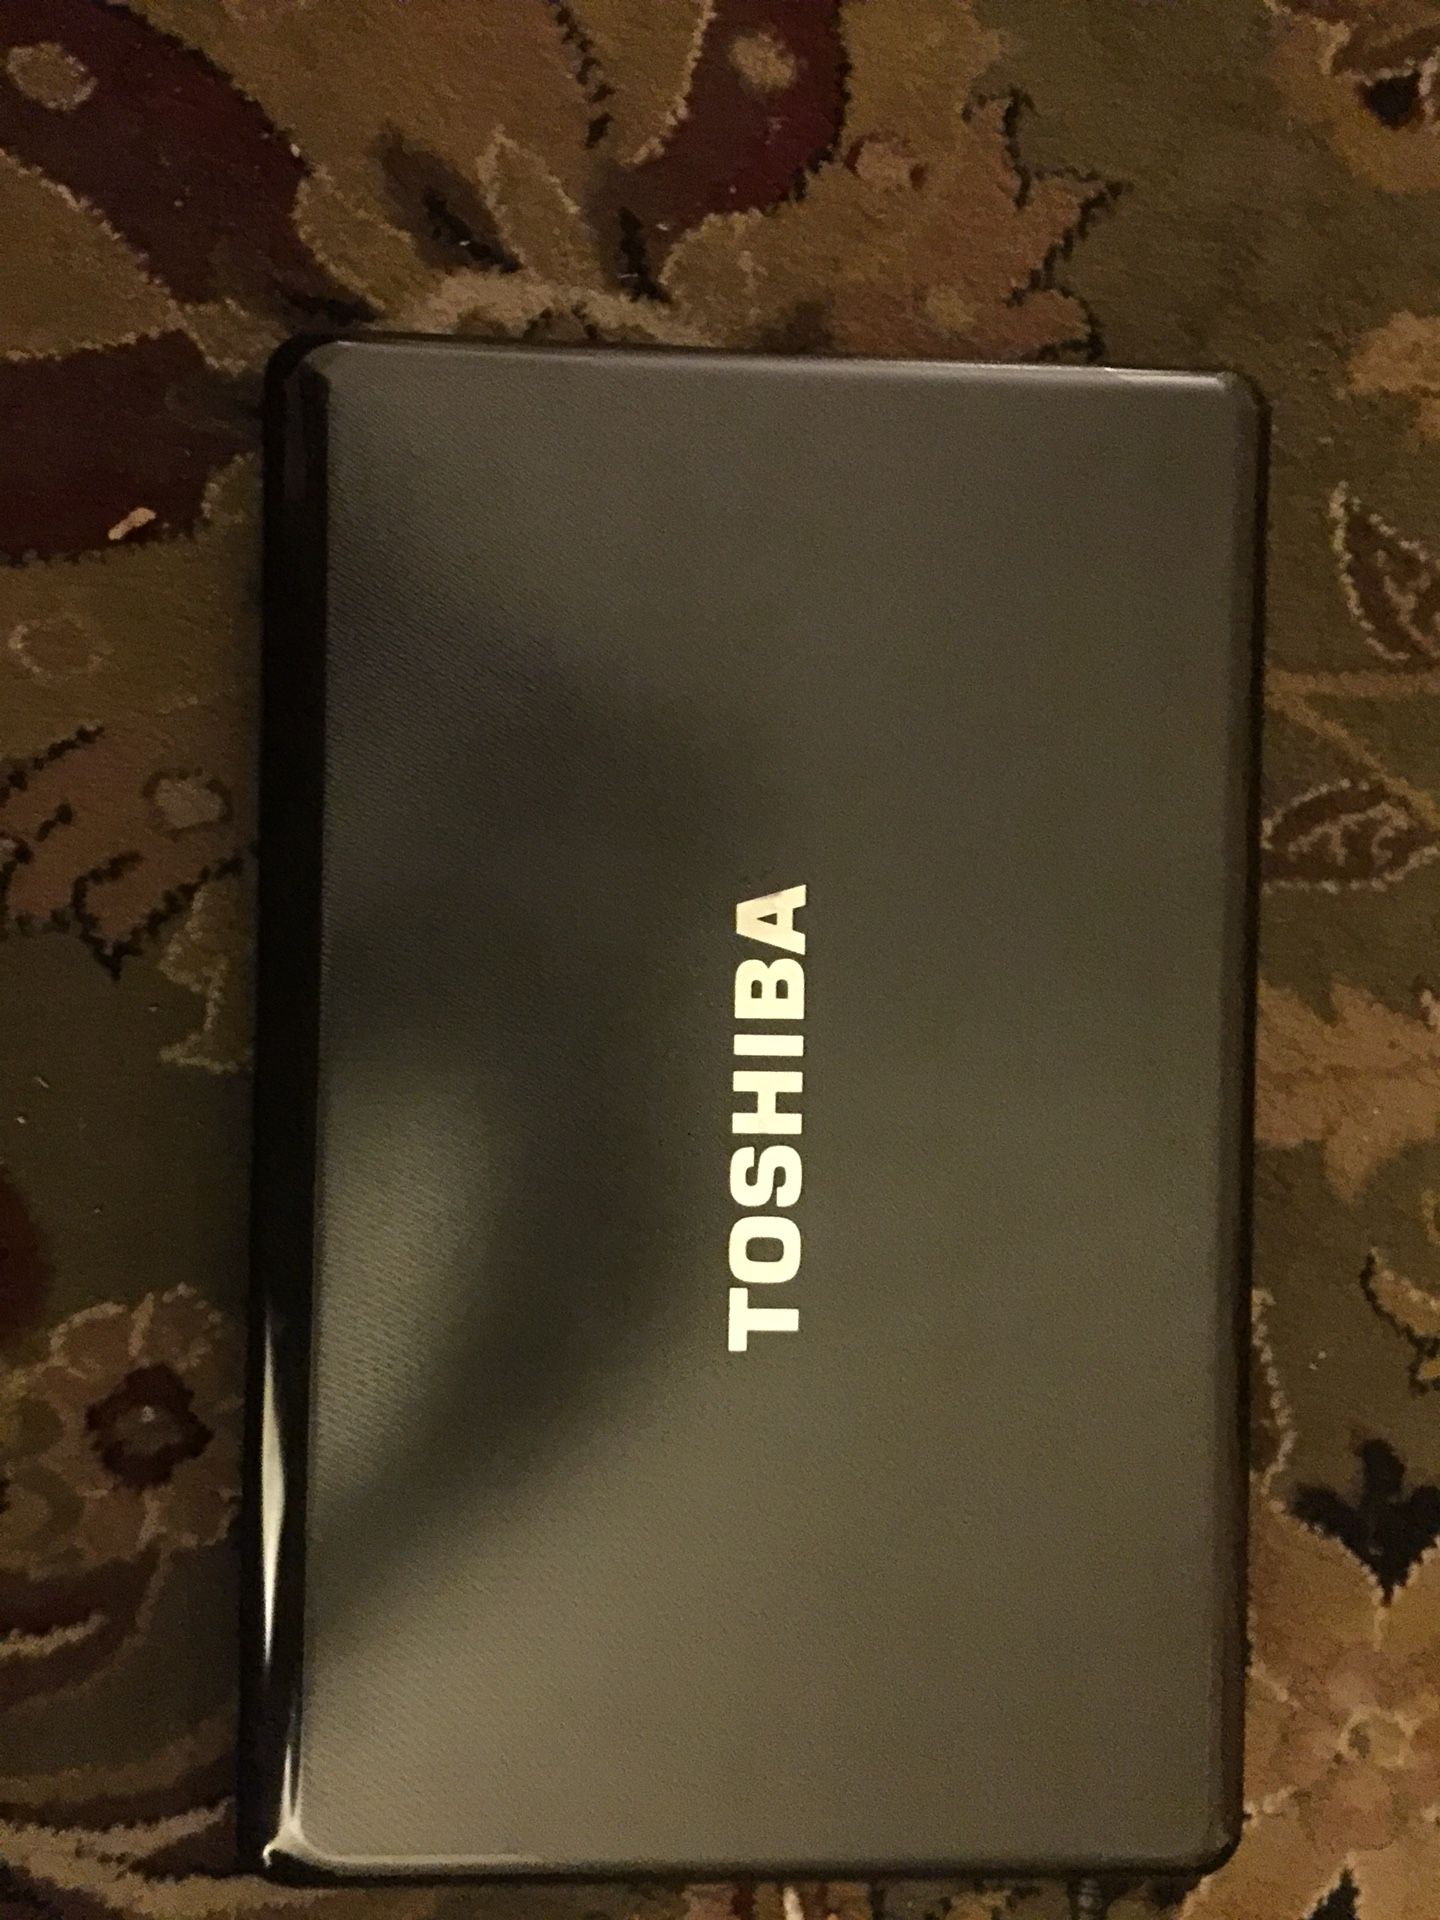 Toshiba a665 laptop windows 7 i3 processor